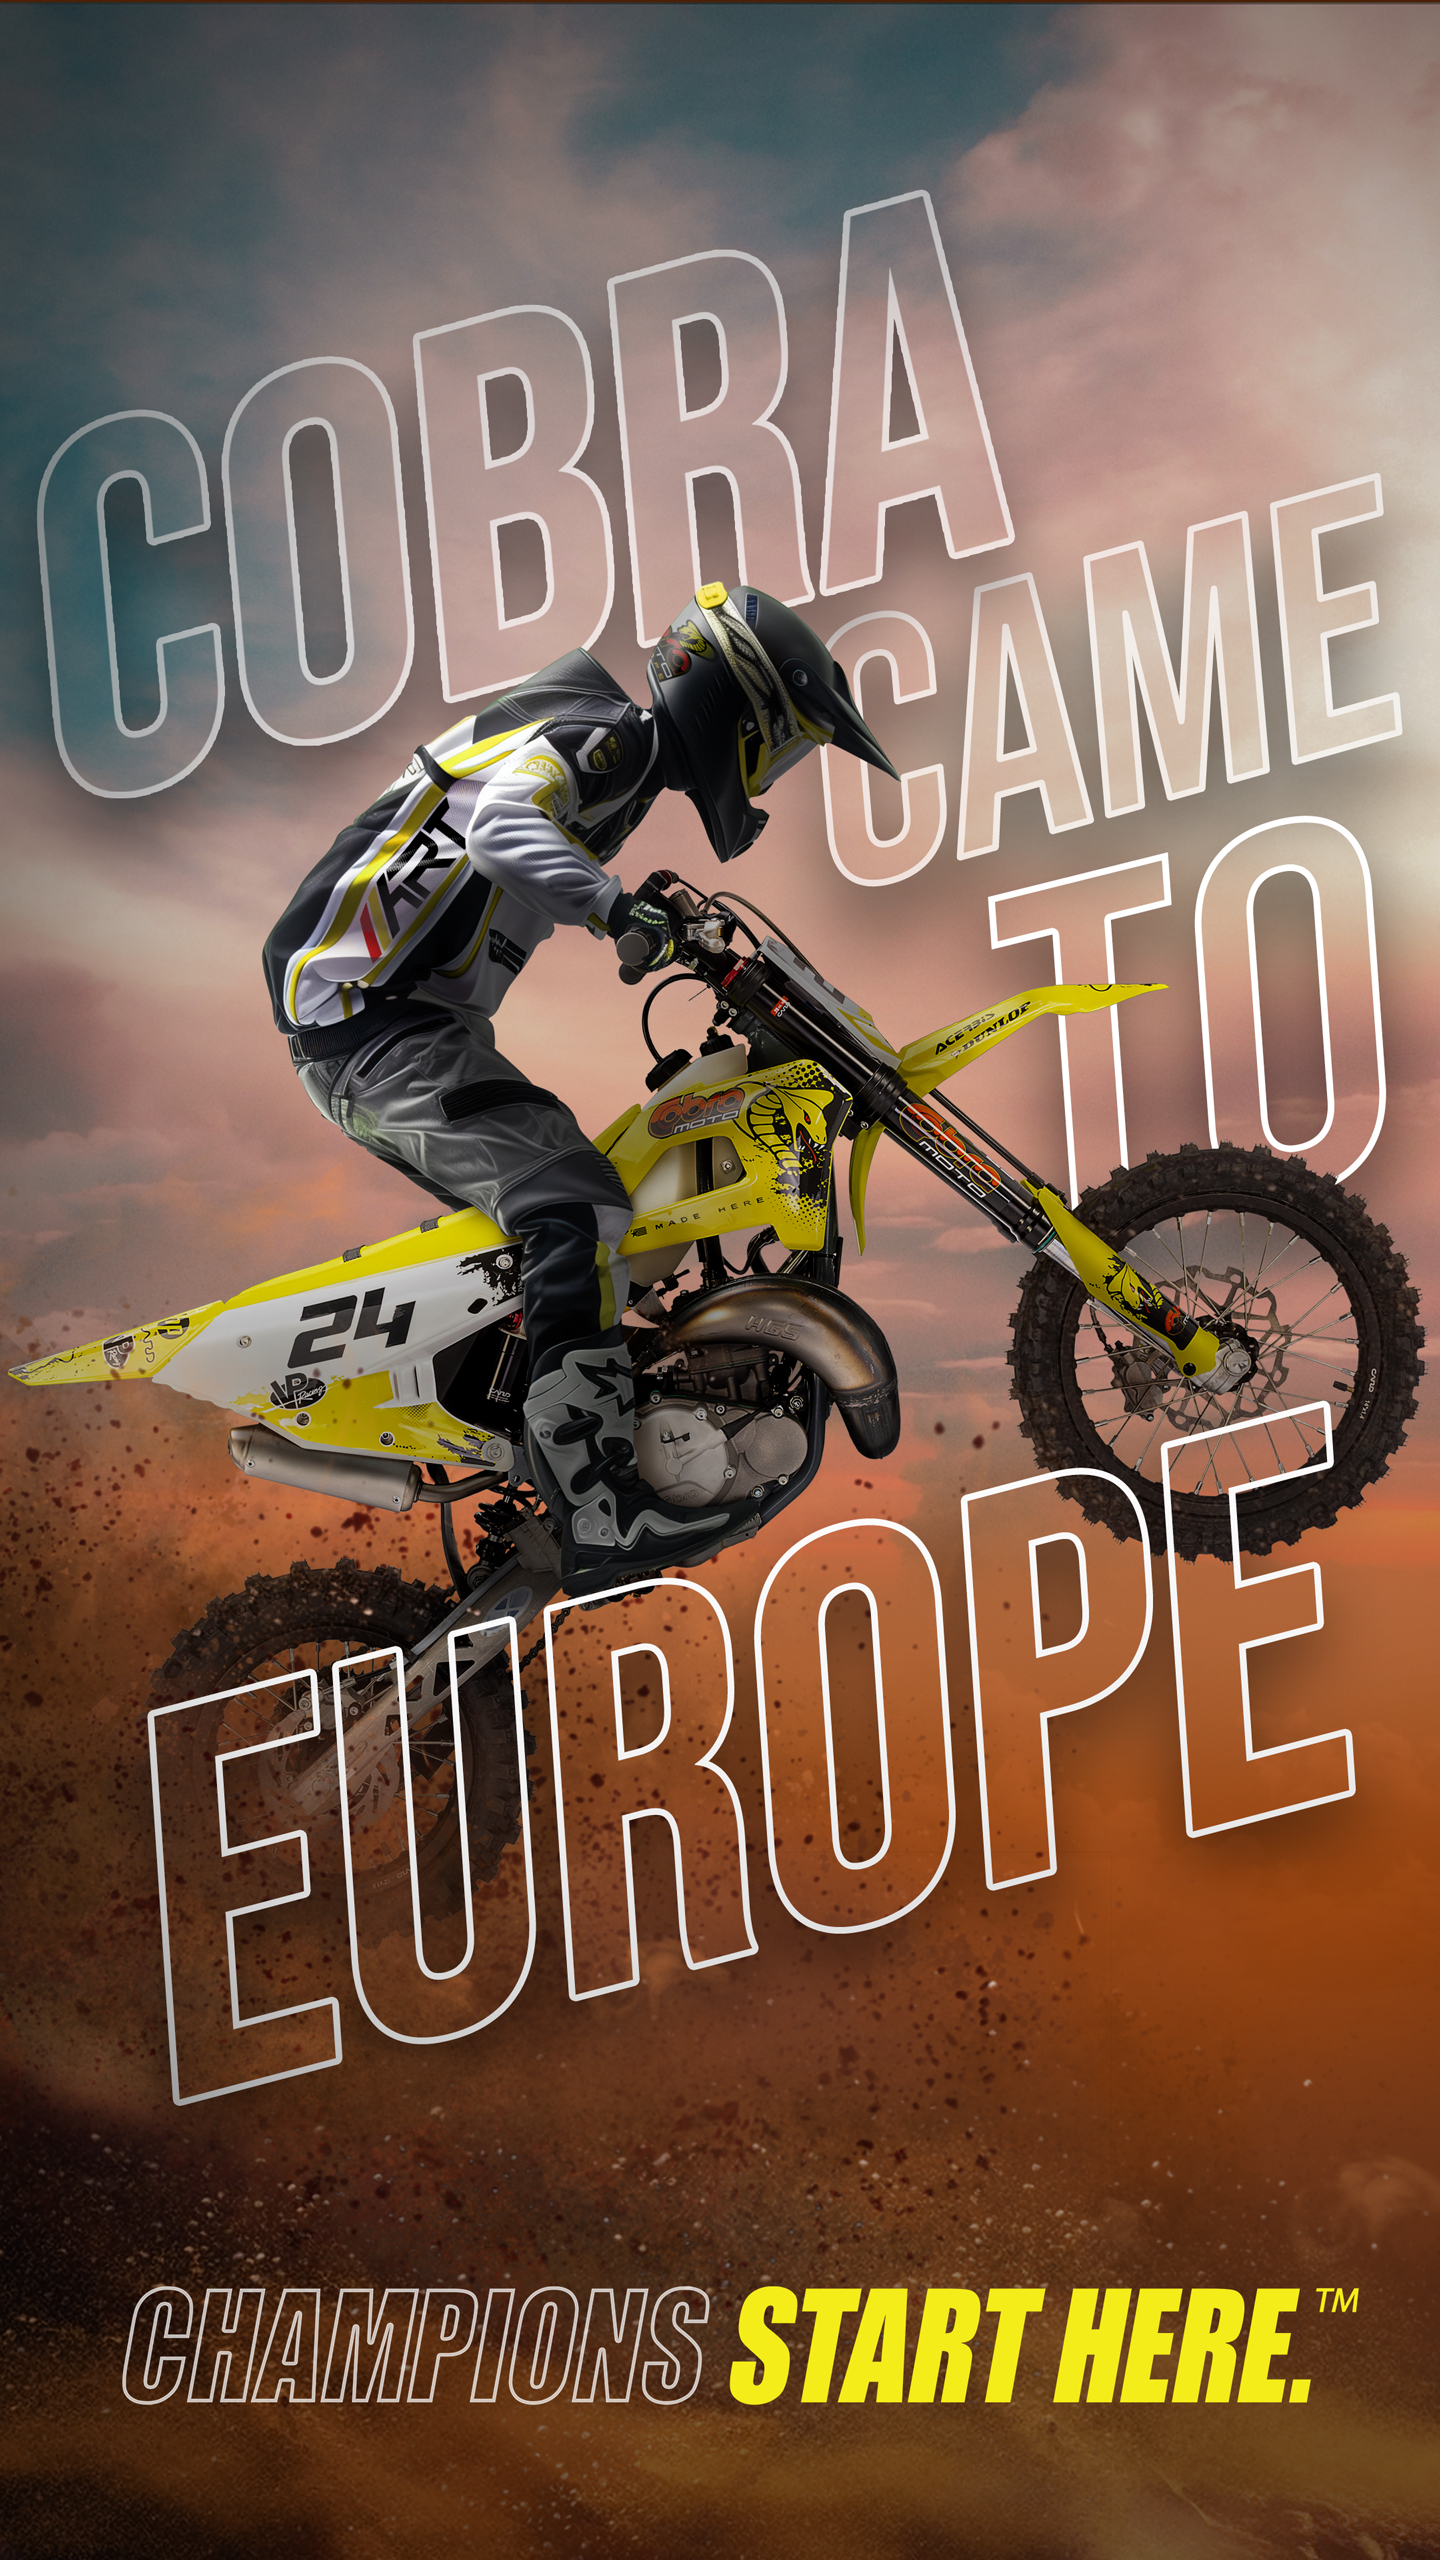 Cobra moto sbarca in Europa